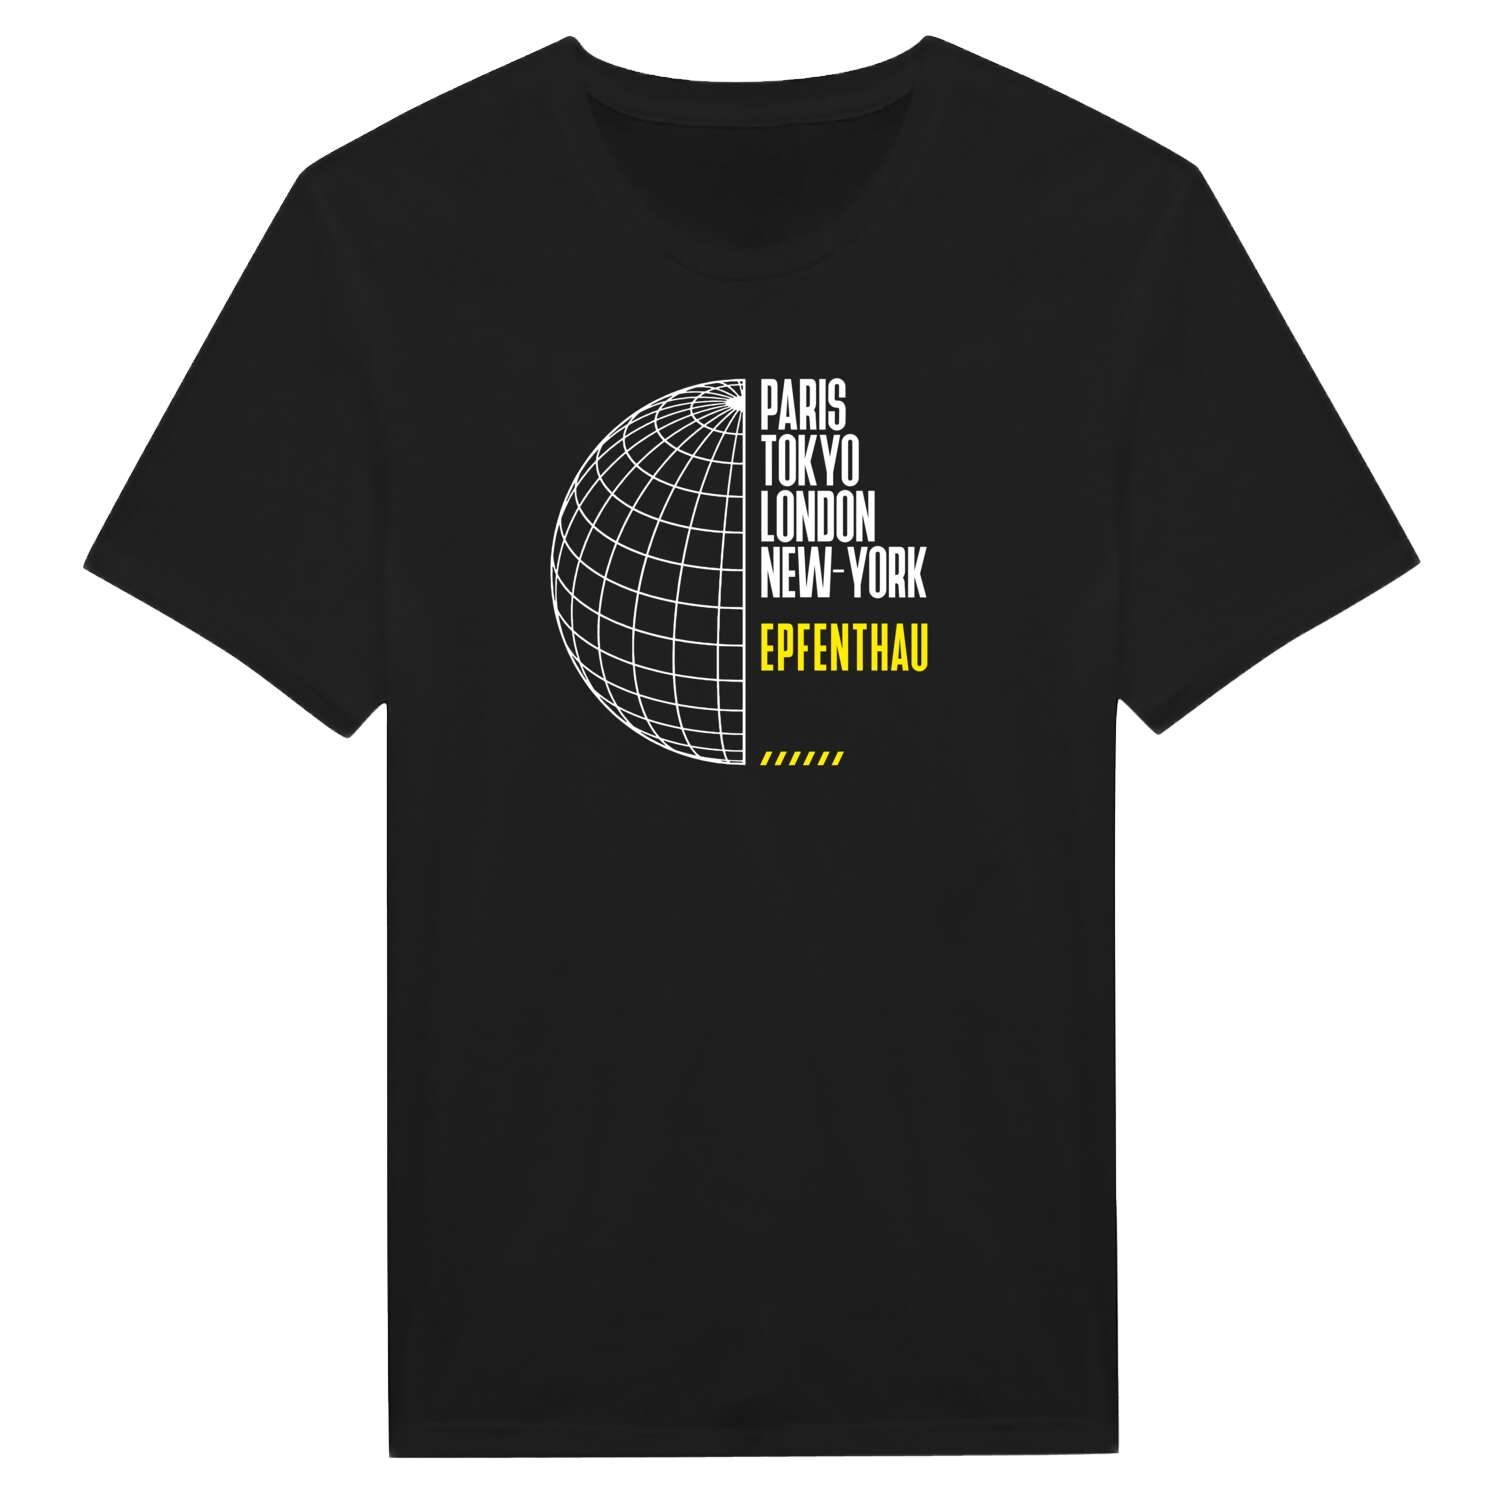 Epfenthau T-Shirt »Paris Tokyo London«